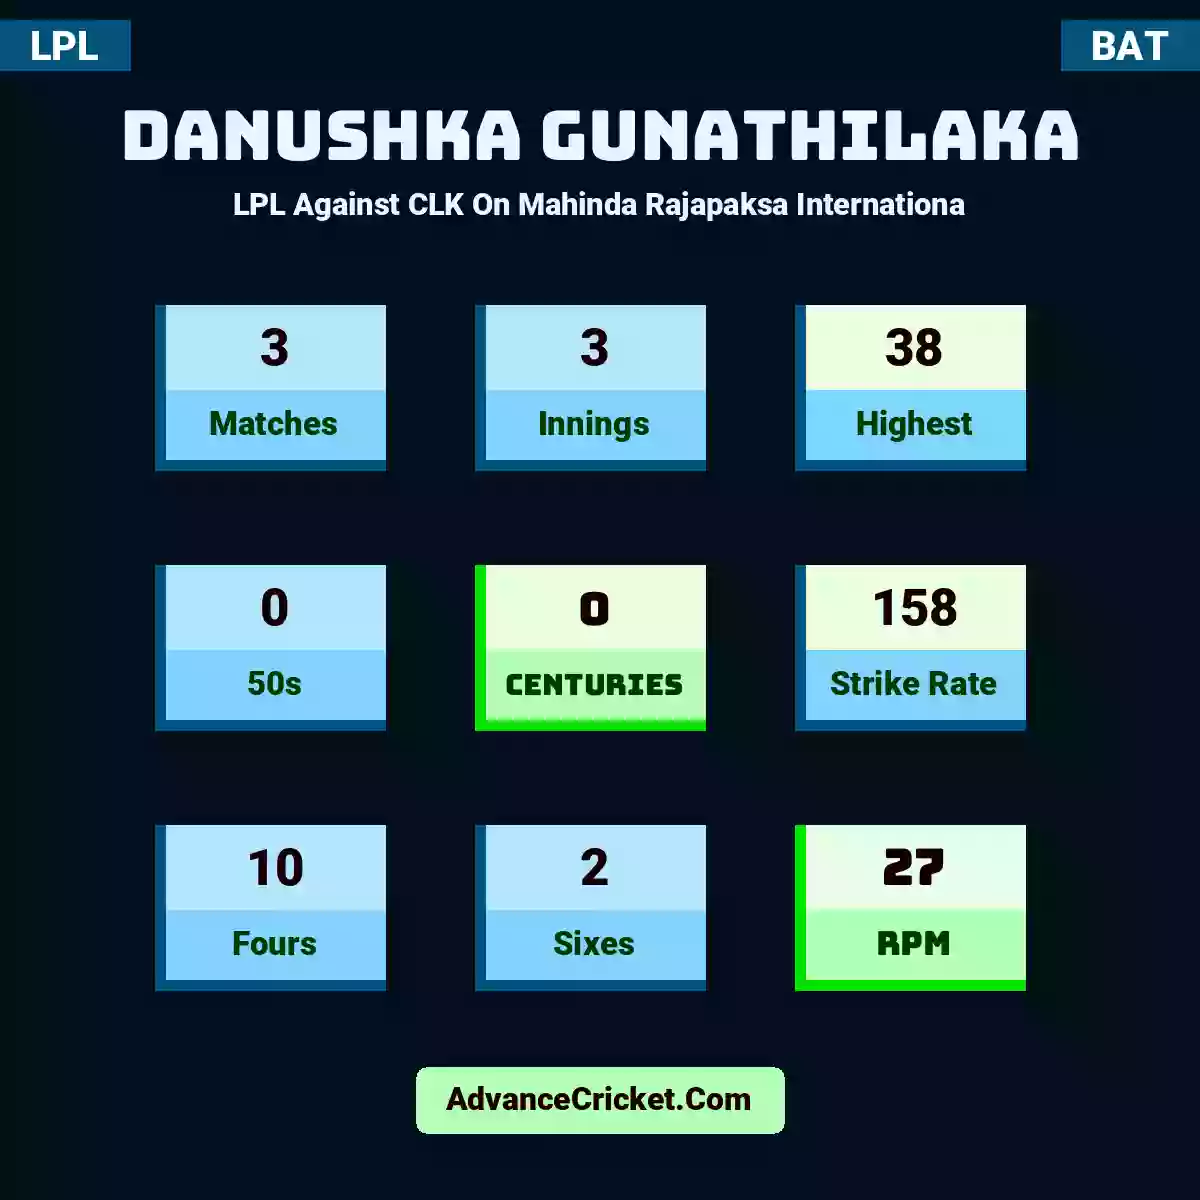 Danushka Gunathilaka LPL  Against CLK On Mahinda Rajapaksa Internationa, Danushka Gunathilaka played 3 matches, scored 38 runs as highest, 0 half-centuries, and 0 centuries, with a strike rate of 158. D.Gunathilaka hit 10 fours and 2 sixes, with an RPM of 27.